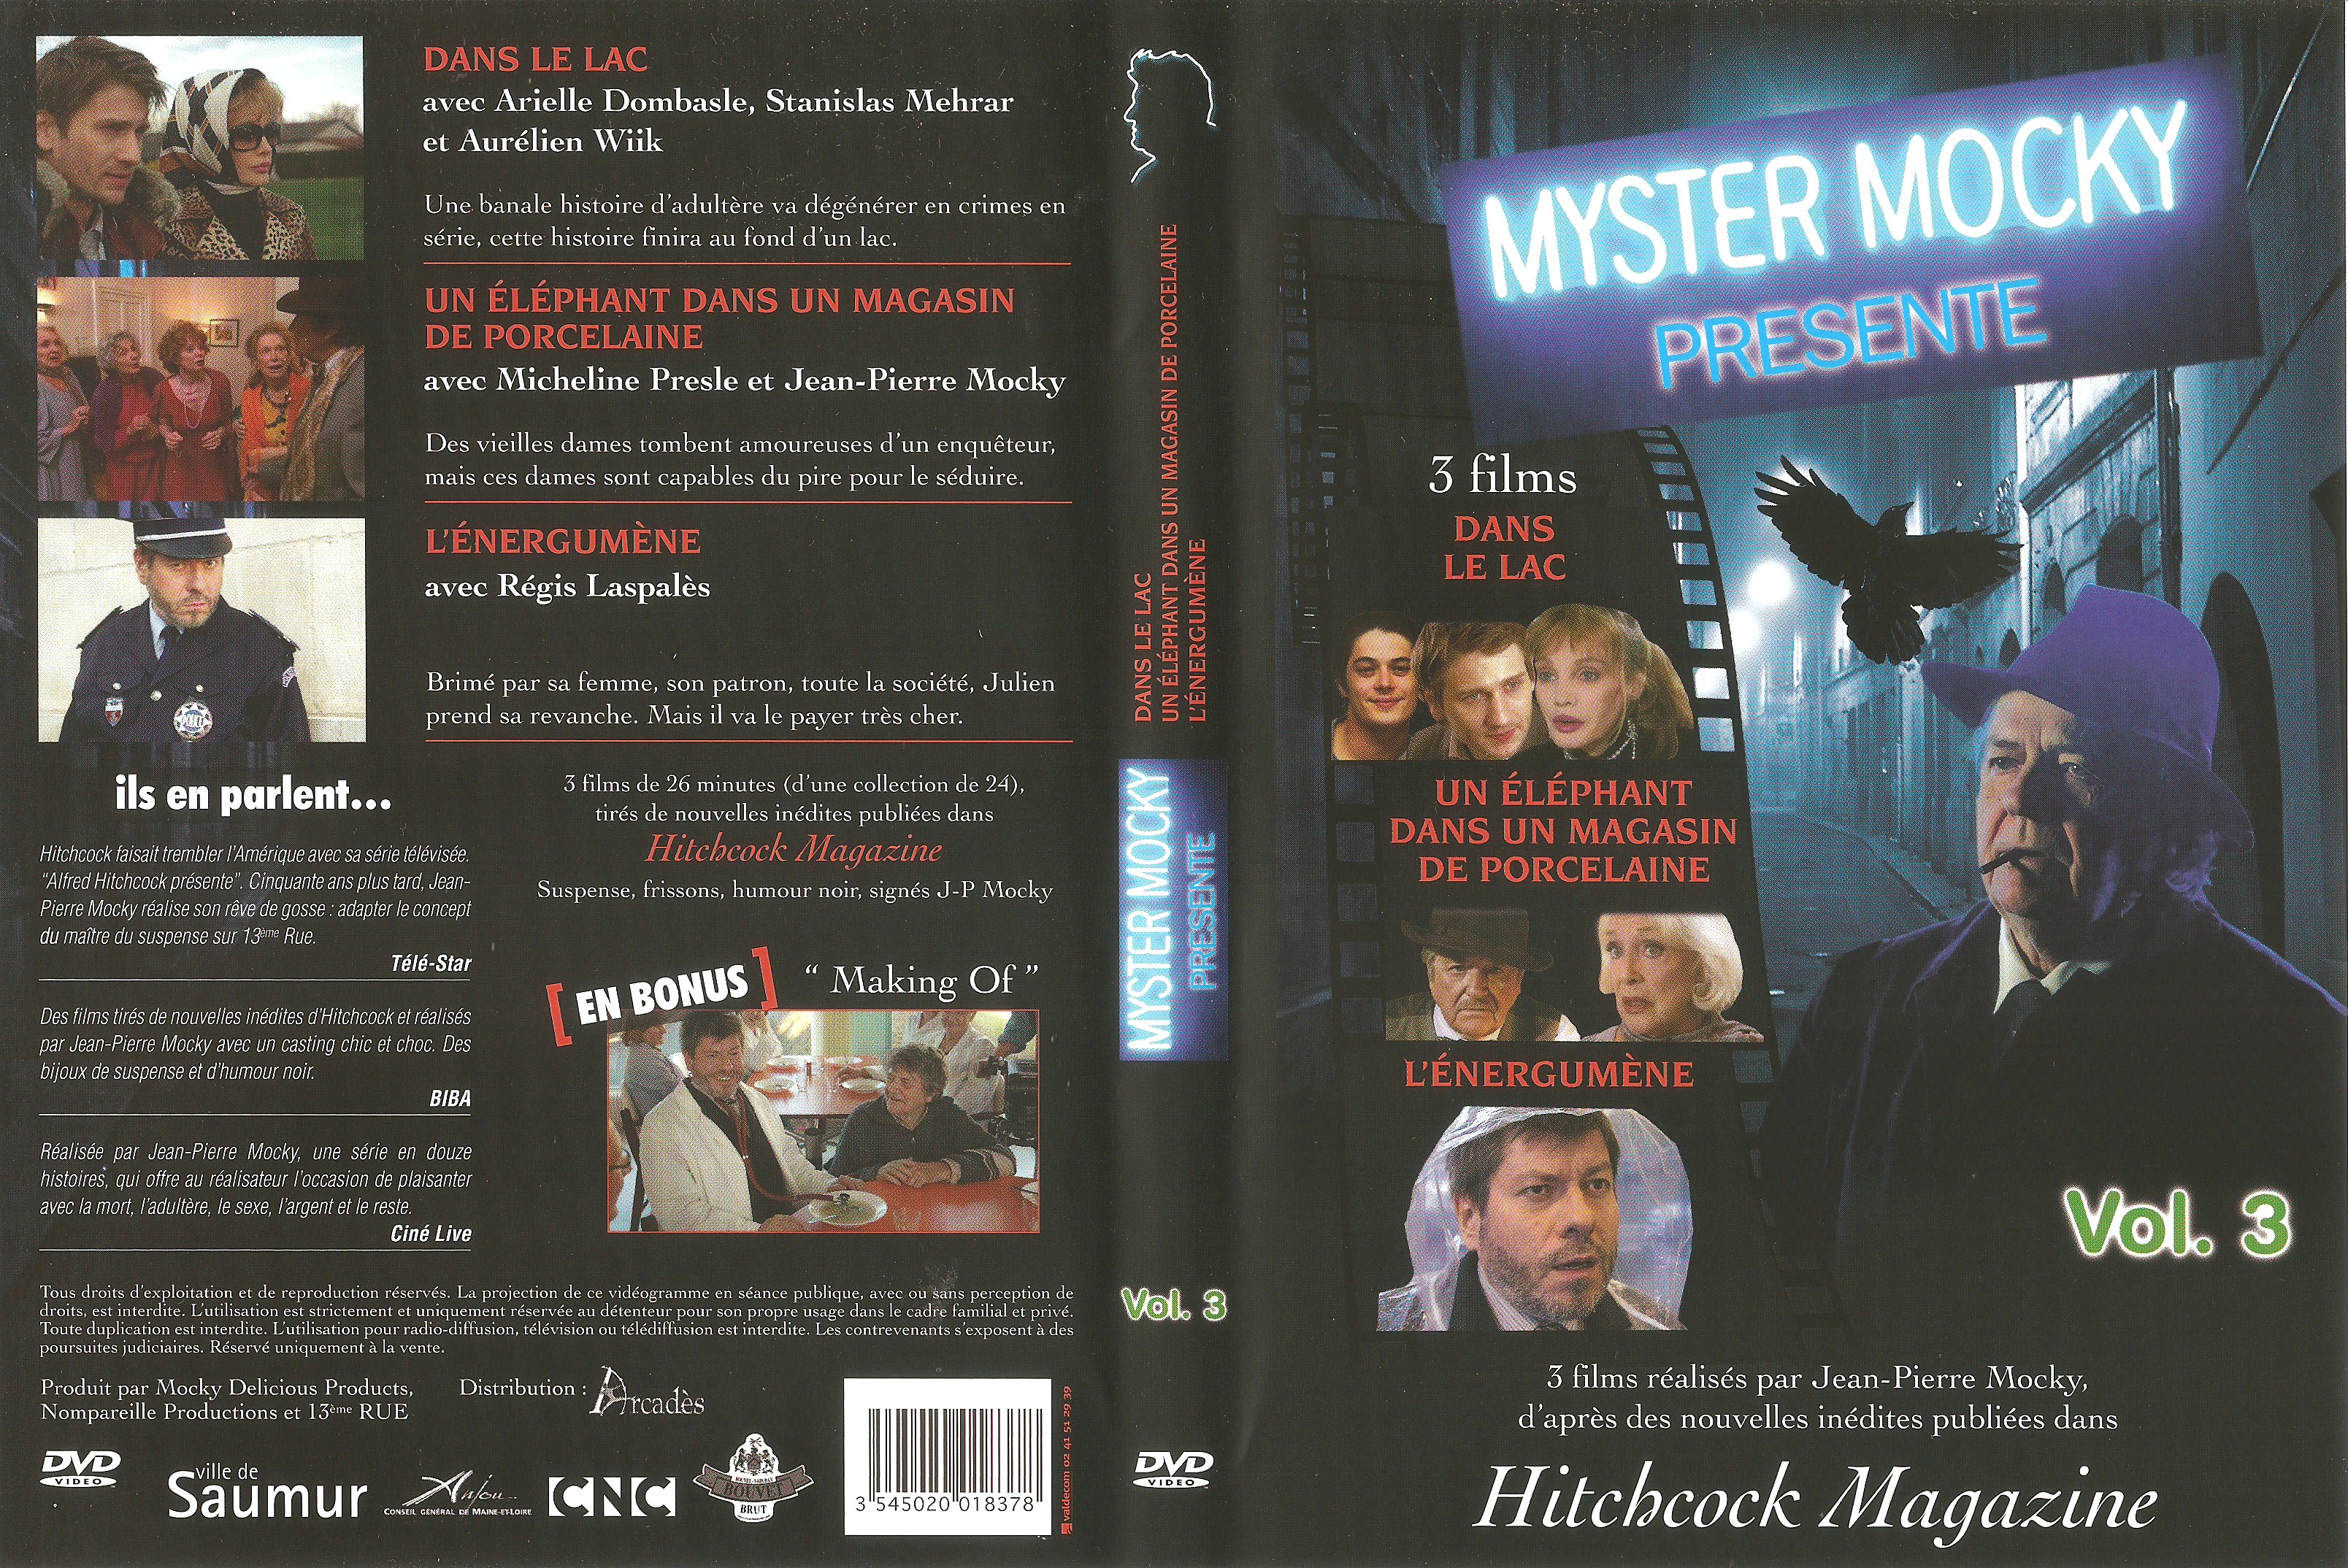 Jaquette DVD Myster Mocky prsente Vol 03